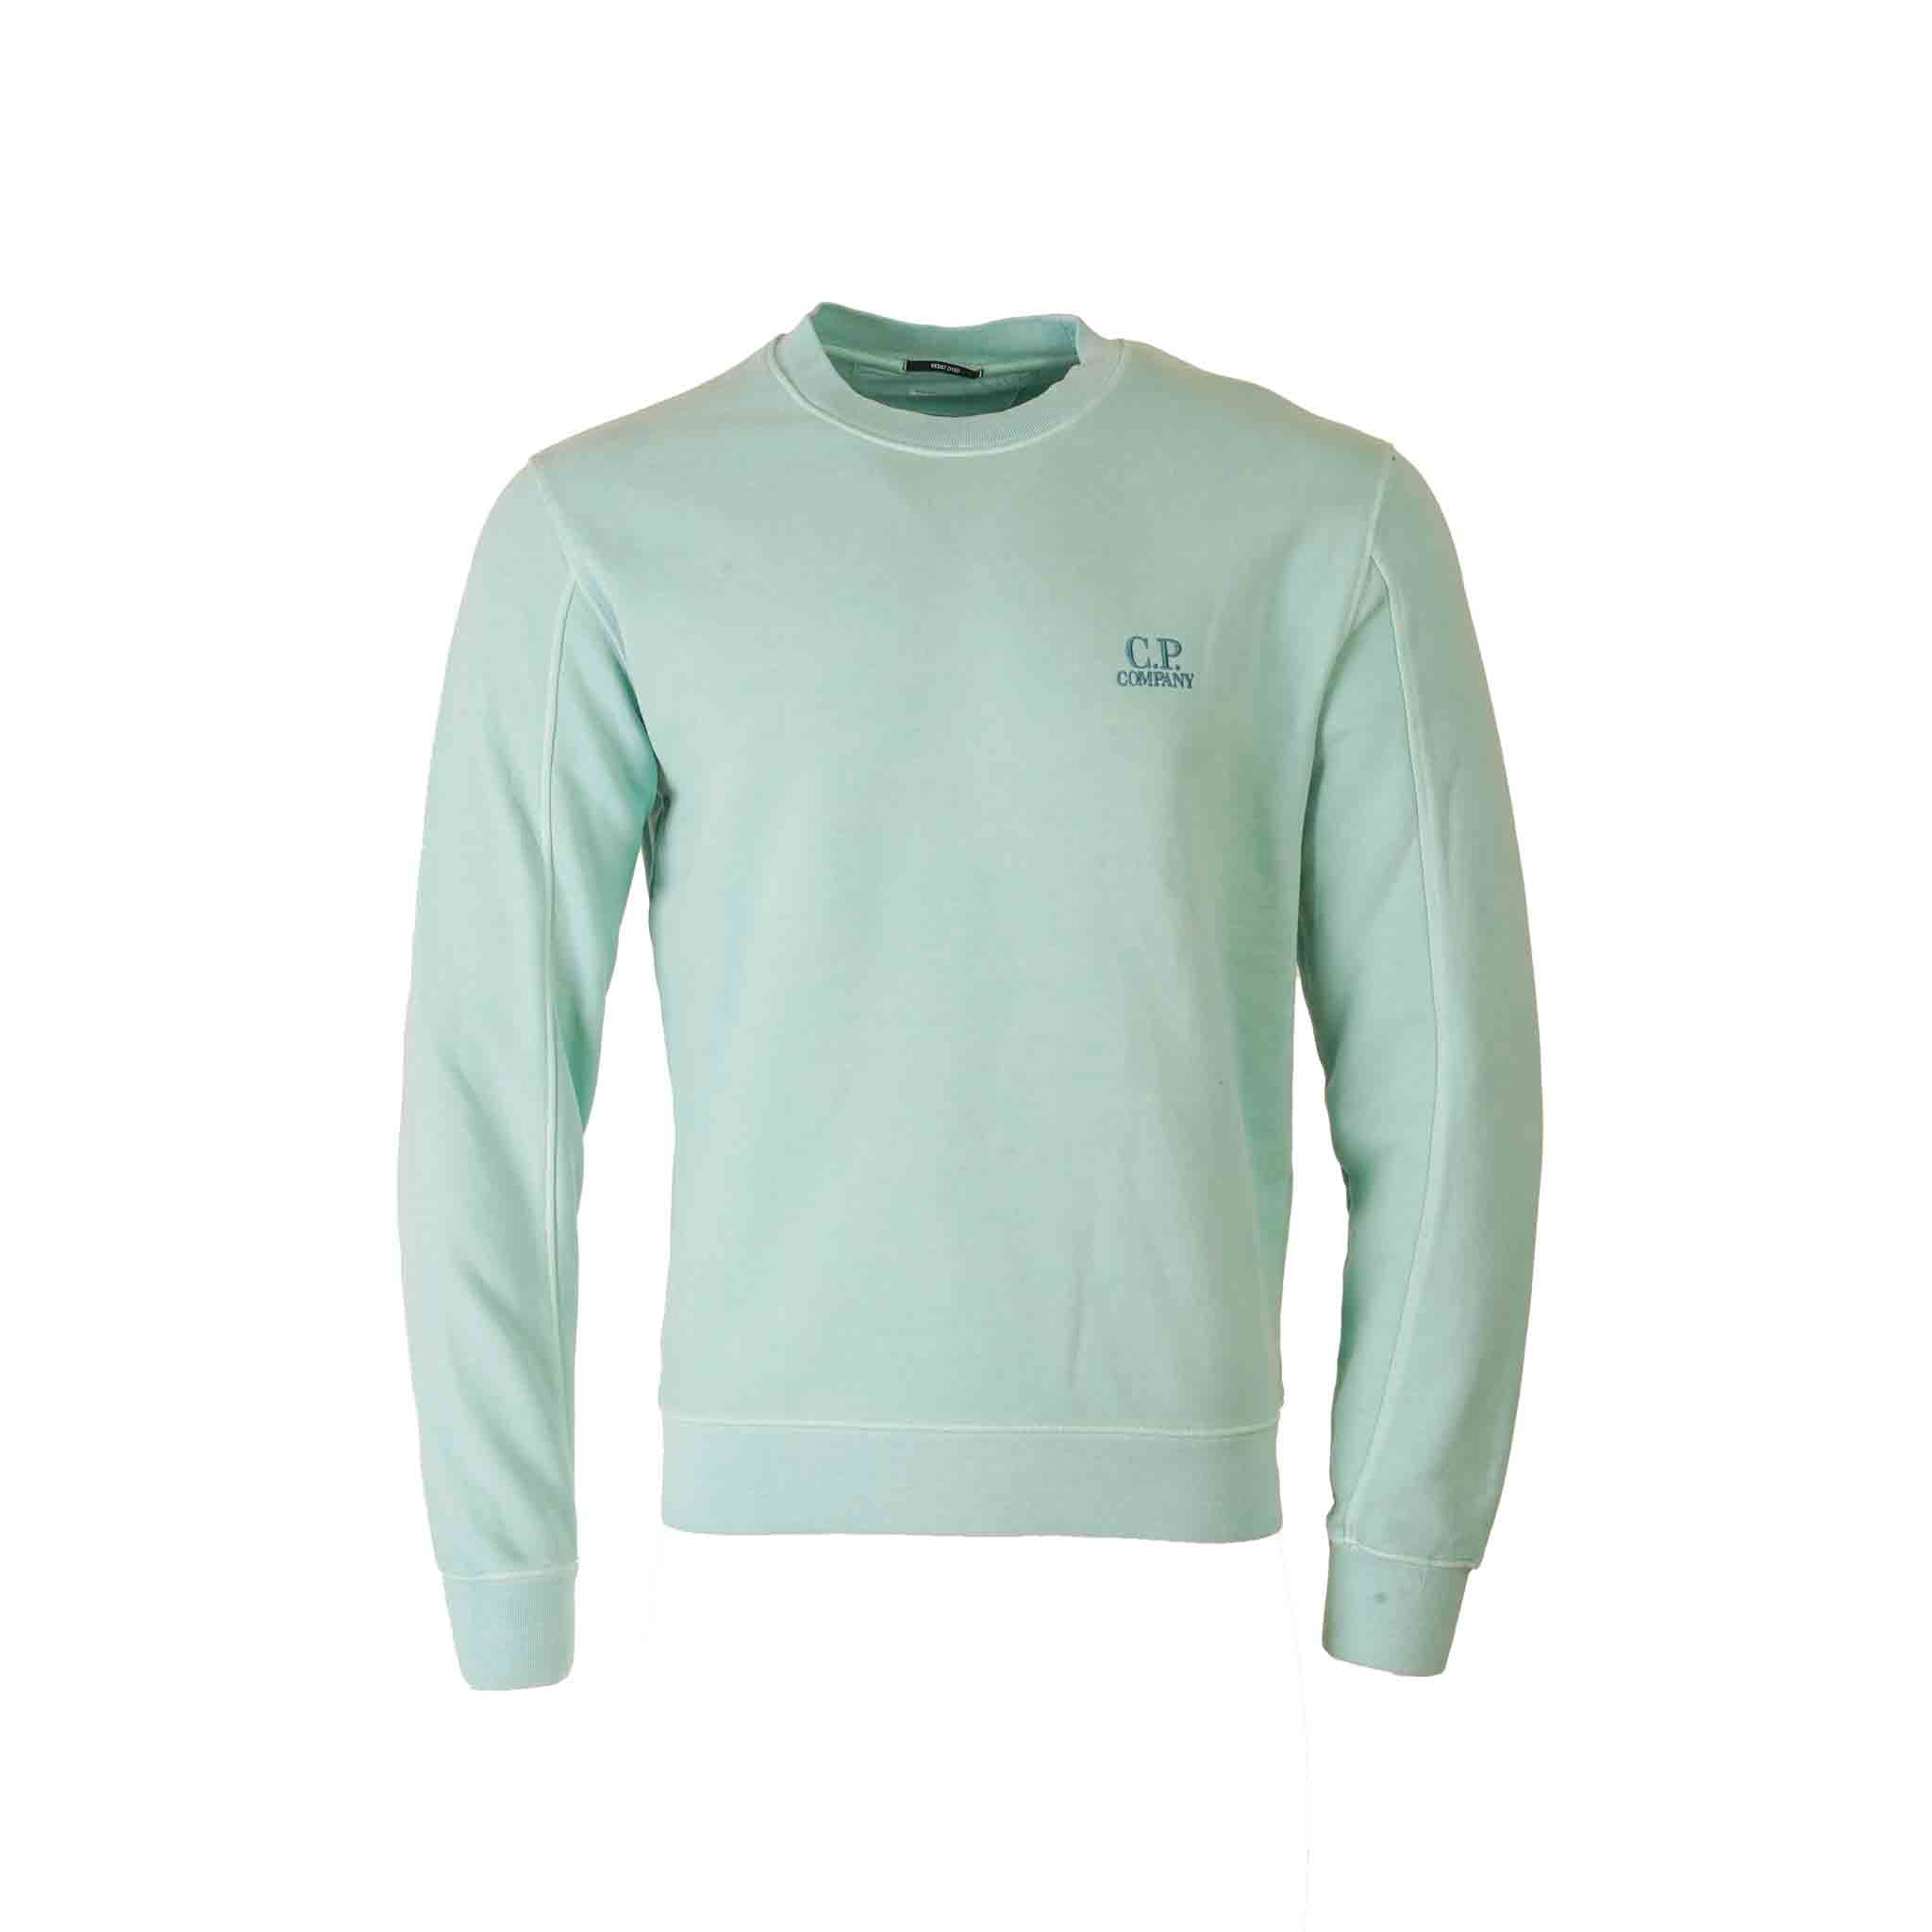 C.P. Company Resist Dyed Logo Sweatshirt in Mint Green